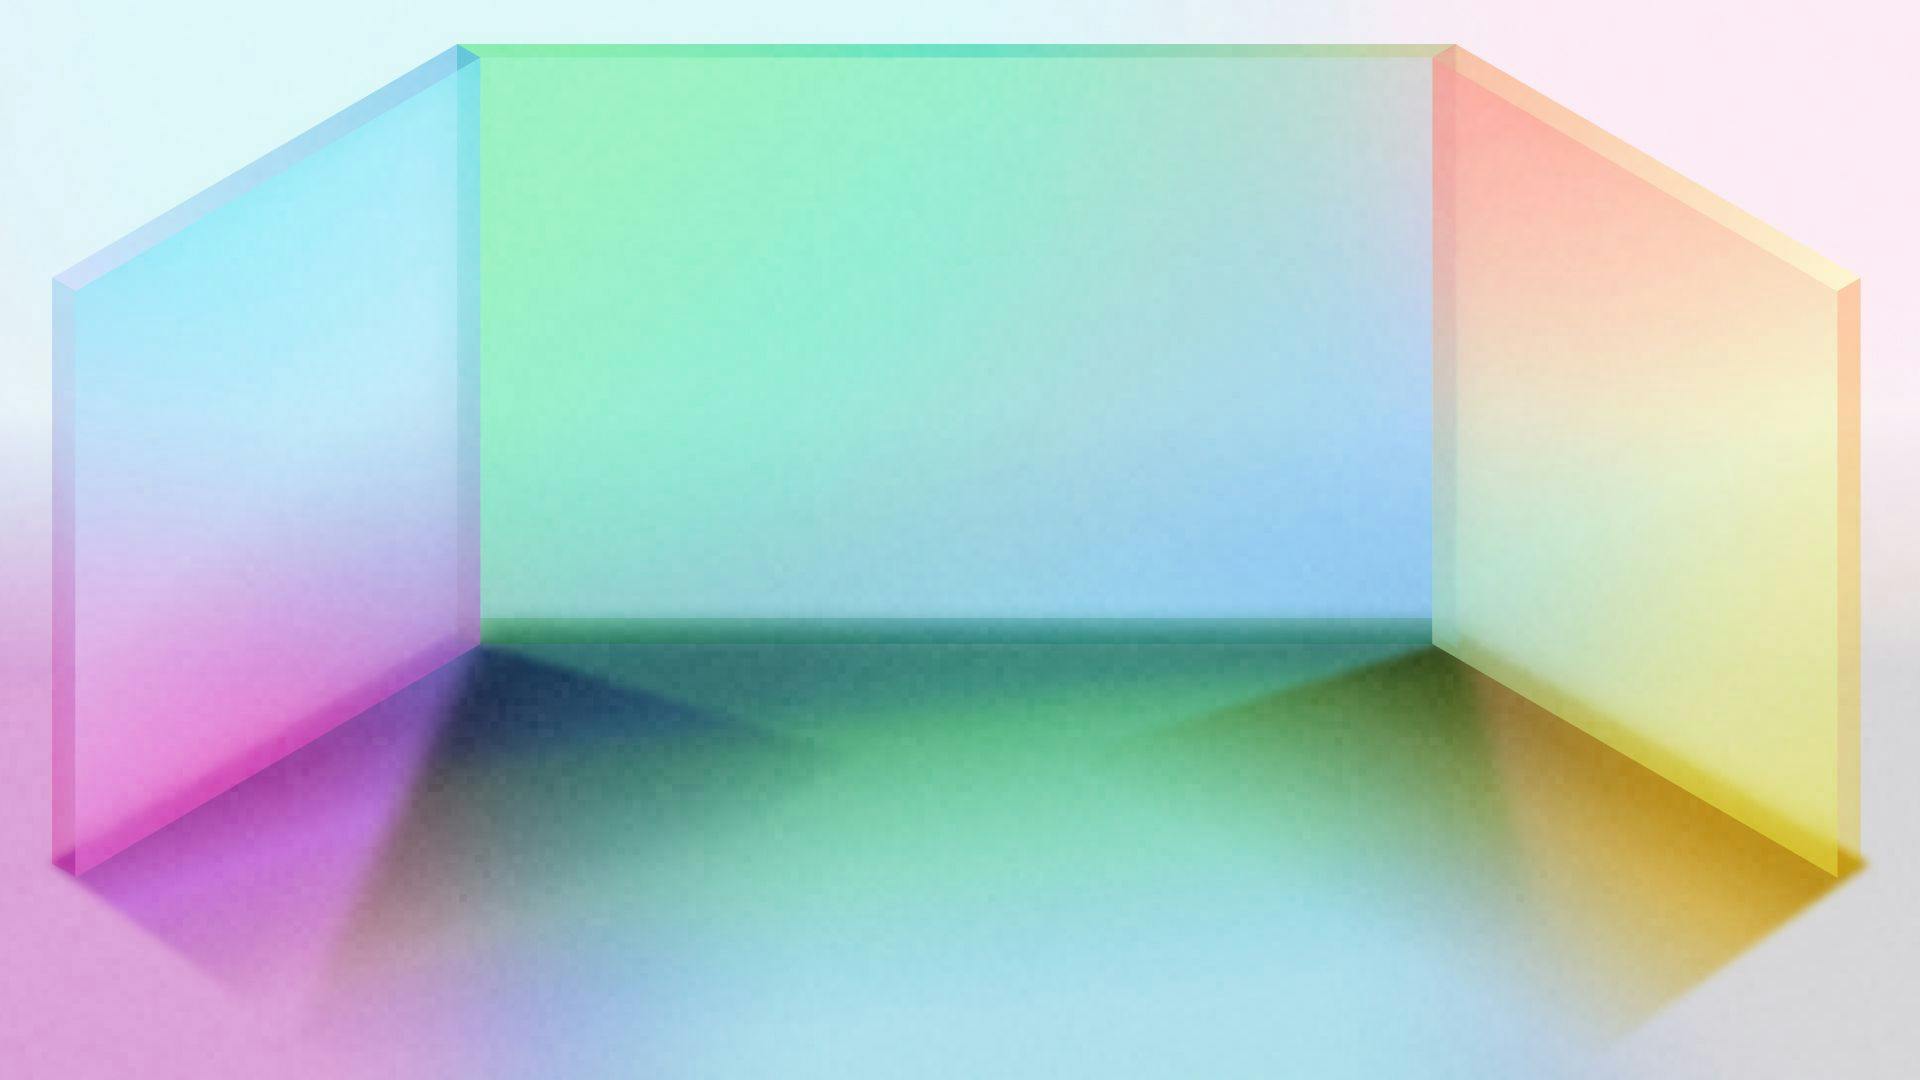 Illustration of rainbow prism shape